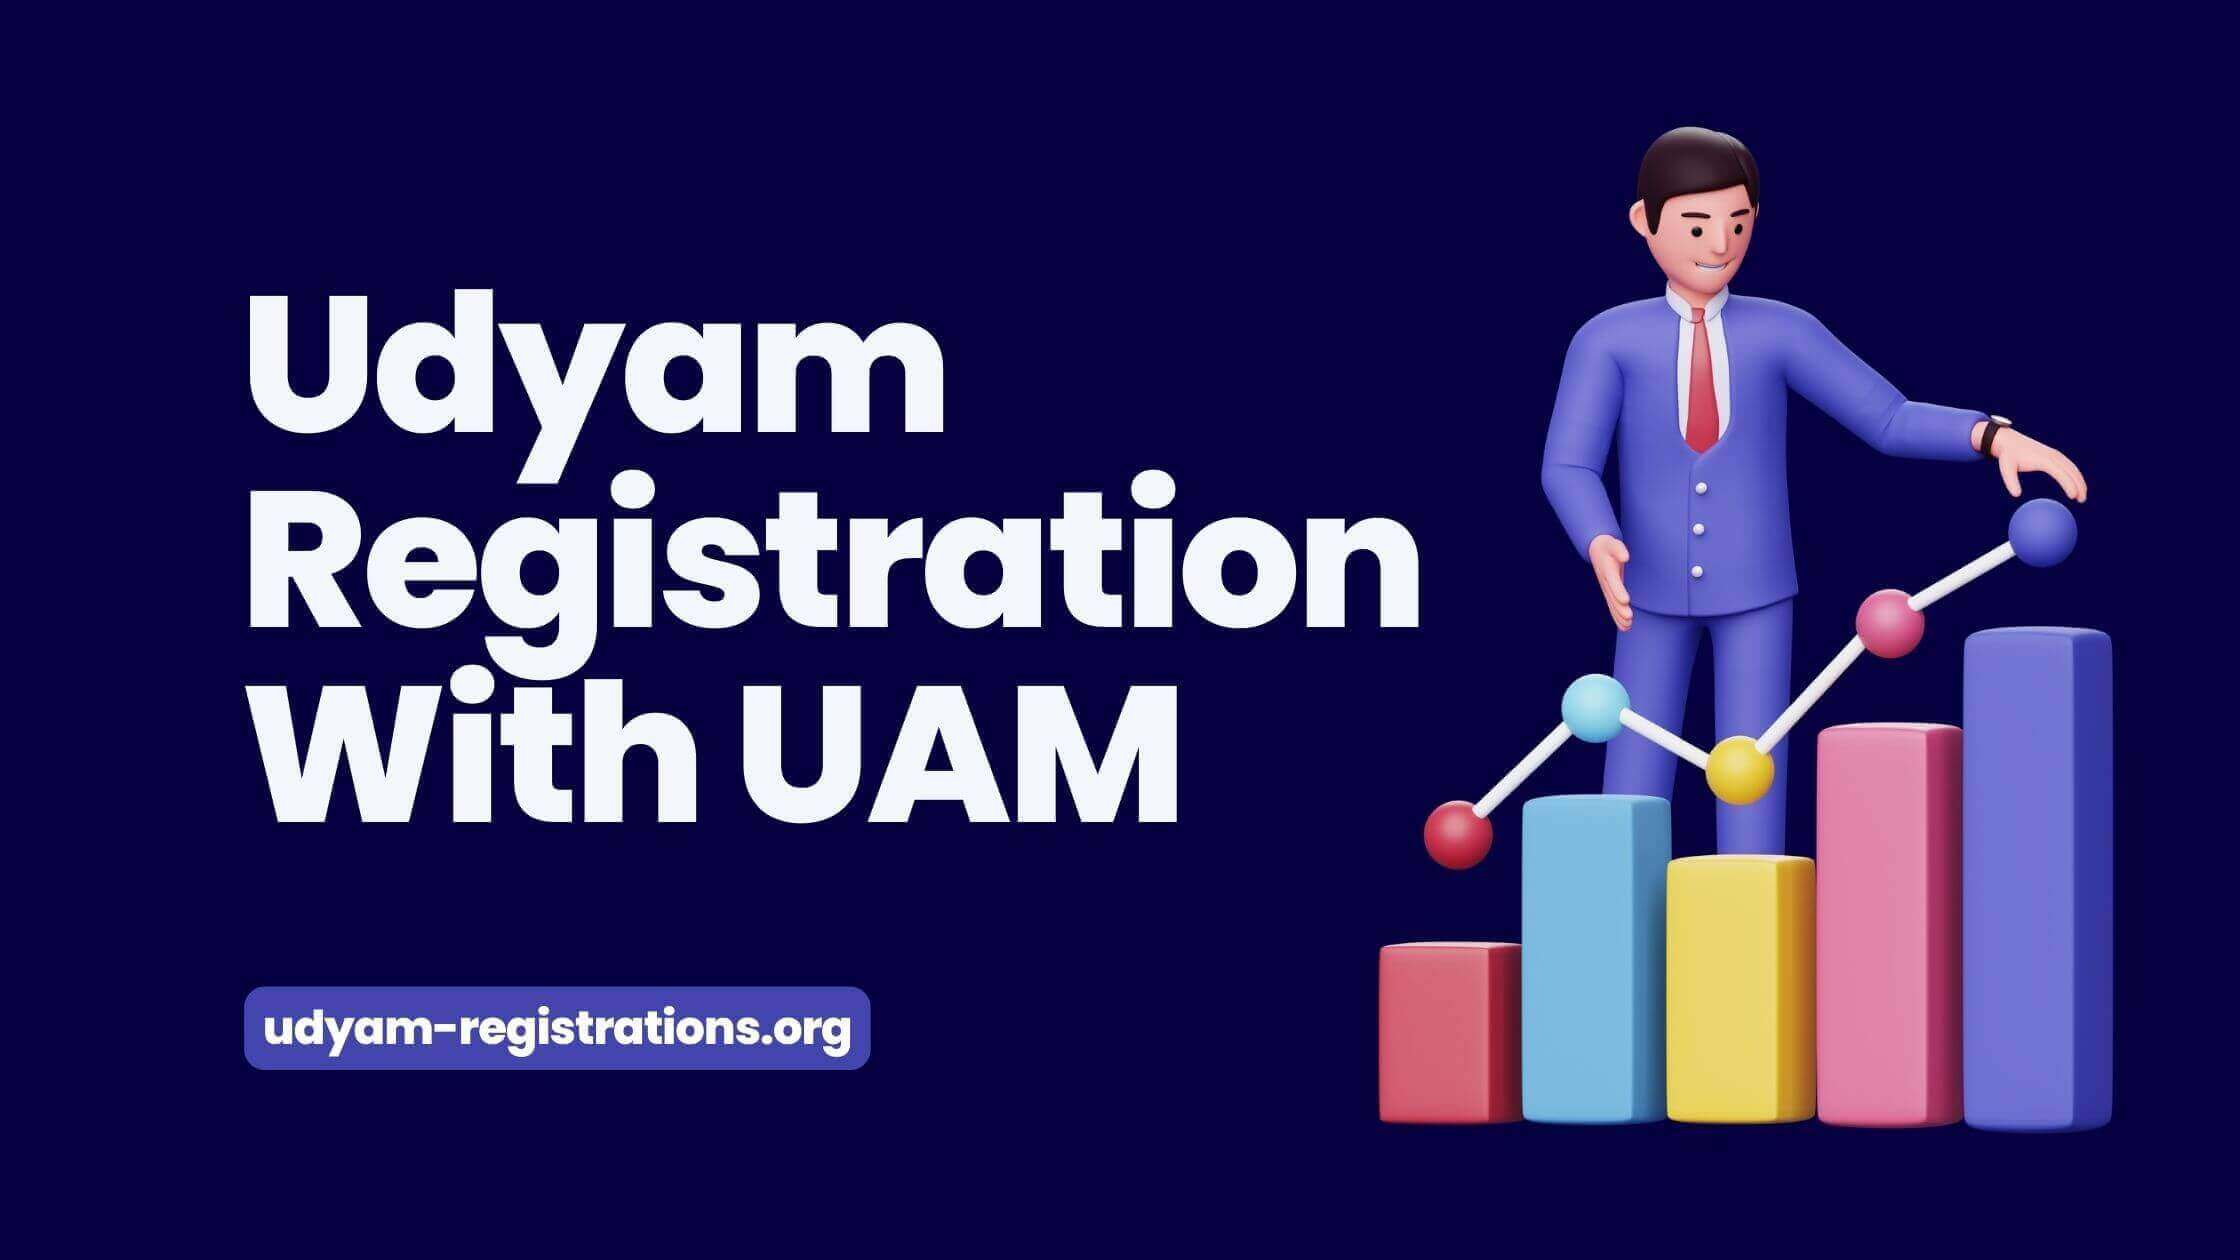 Udyam Registration With UAM